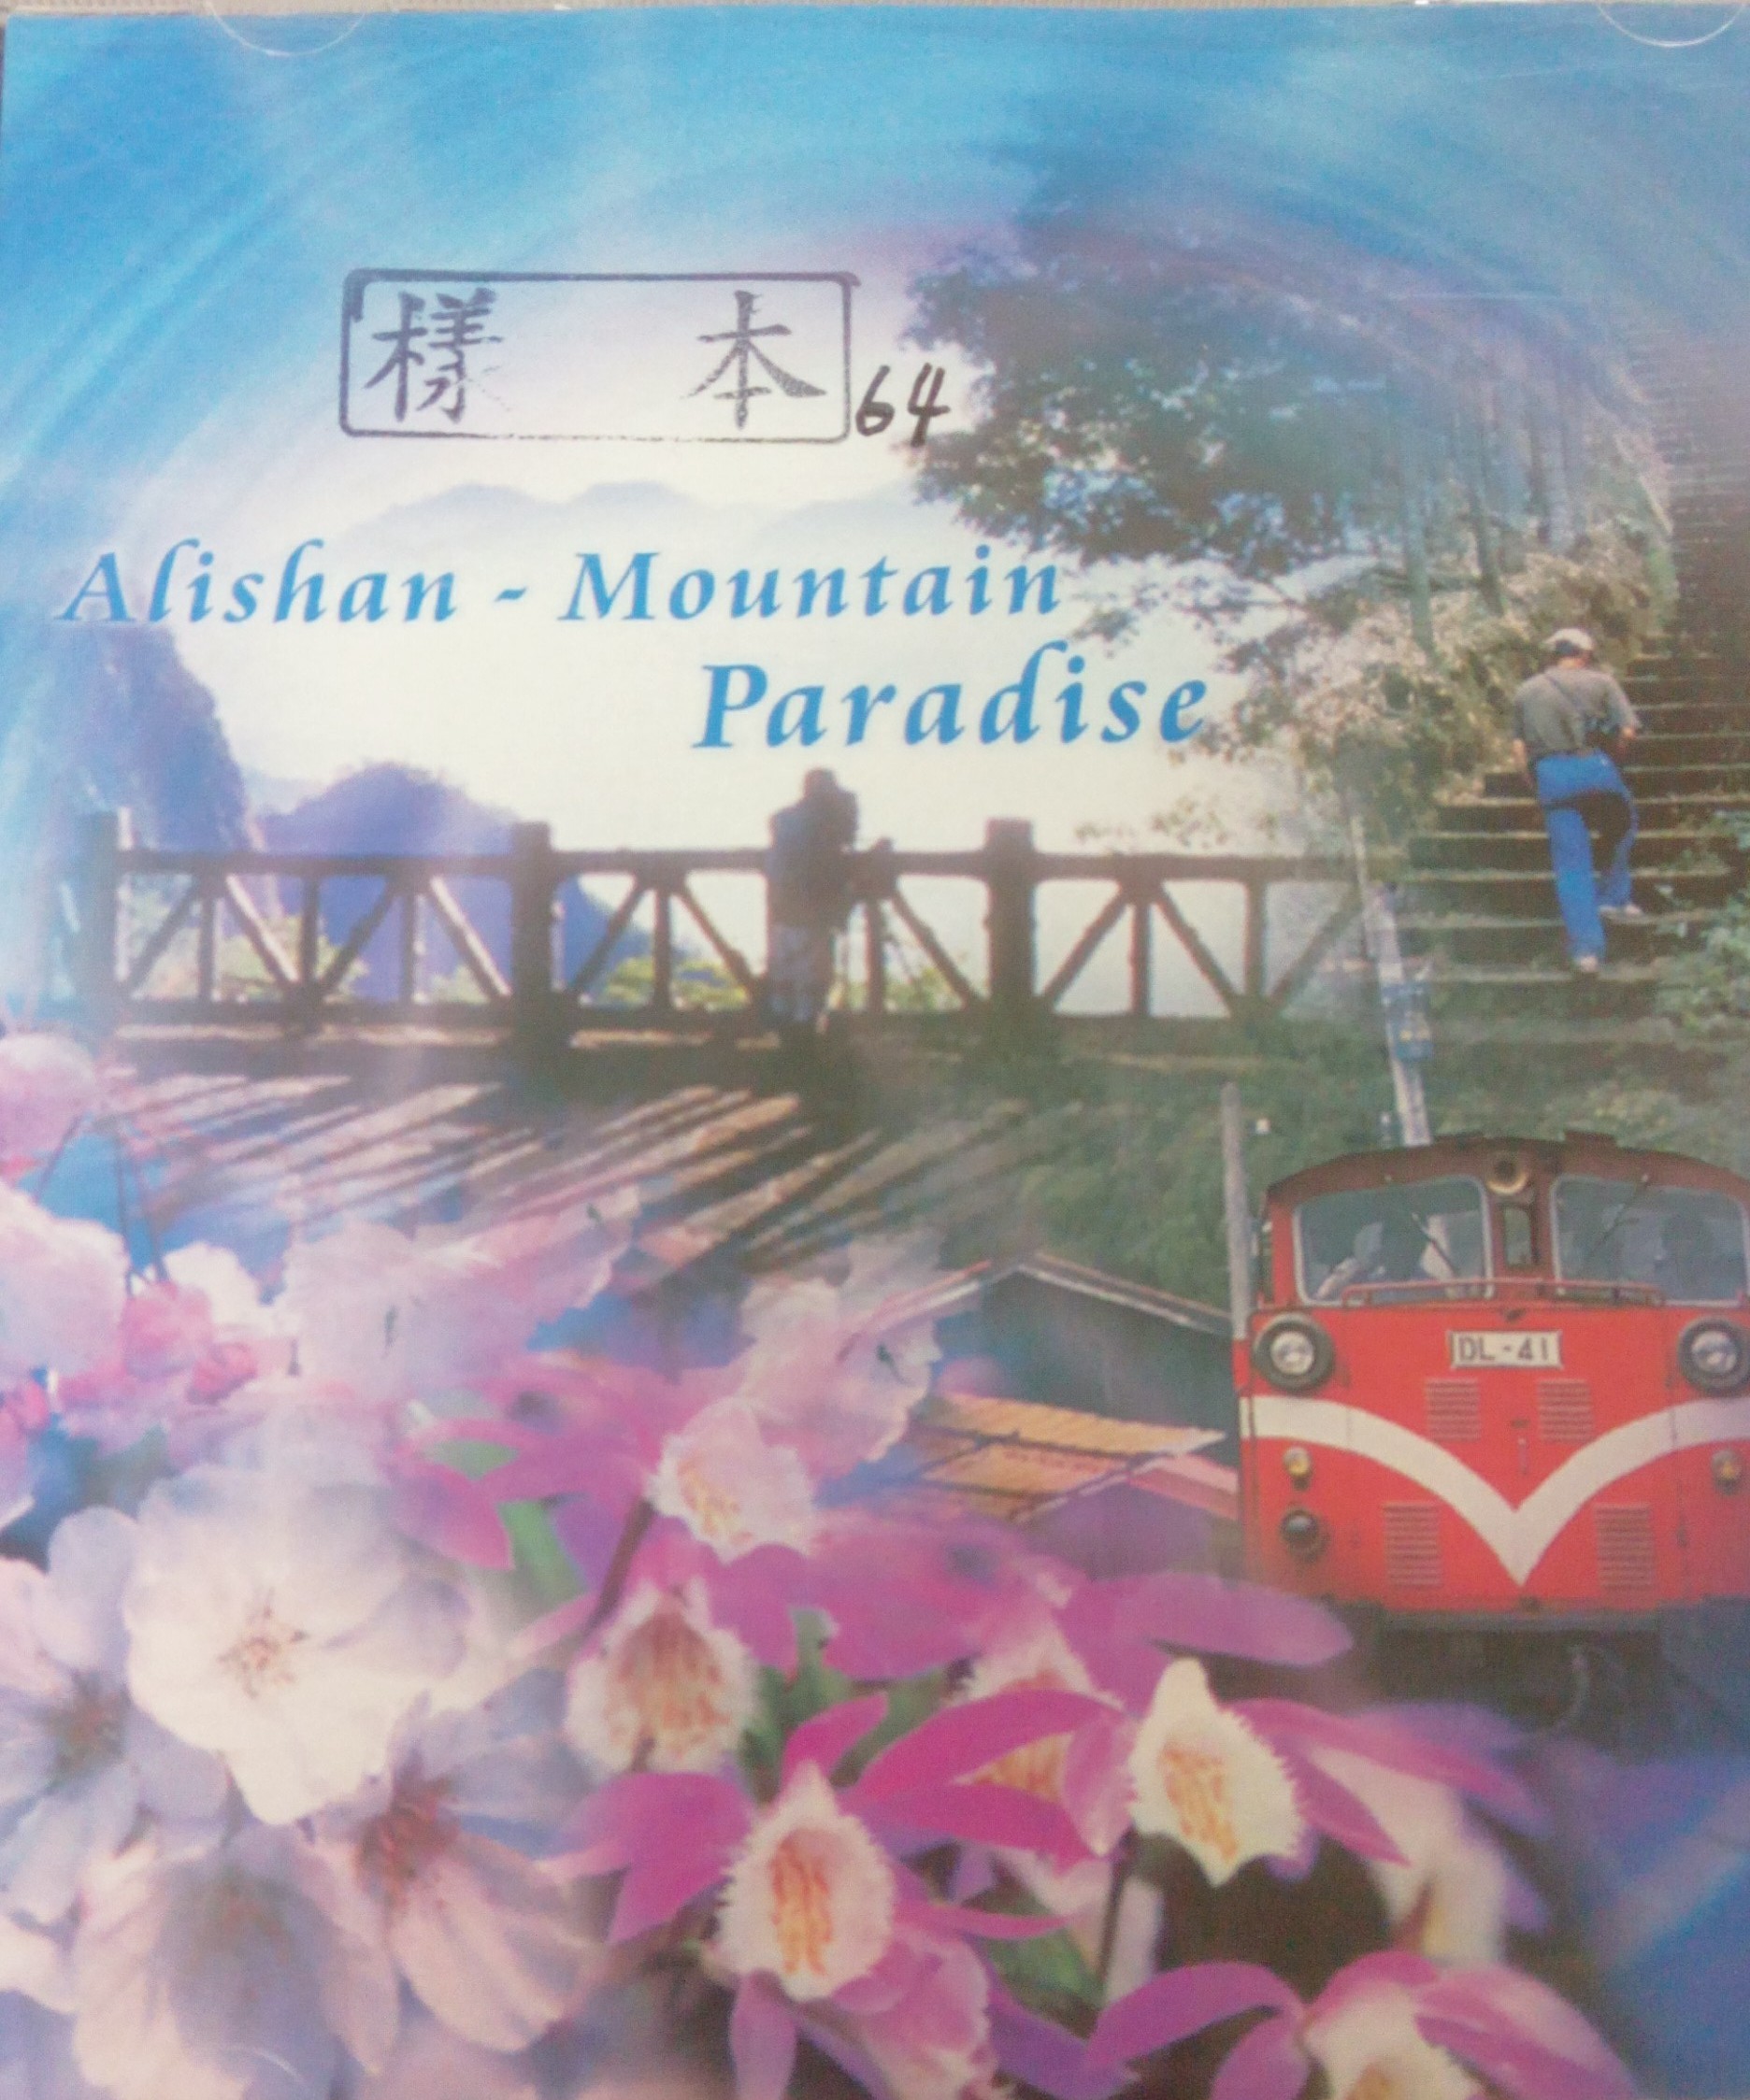 Alishan-Mountain Paradise